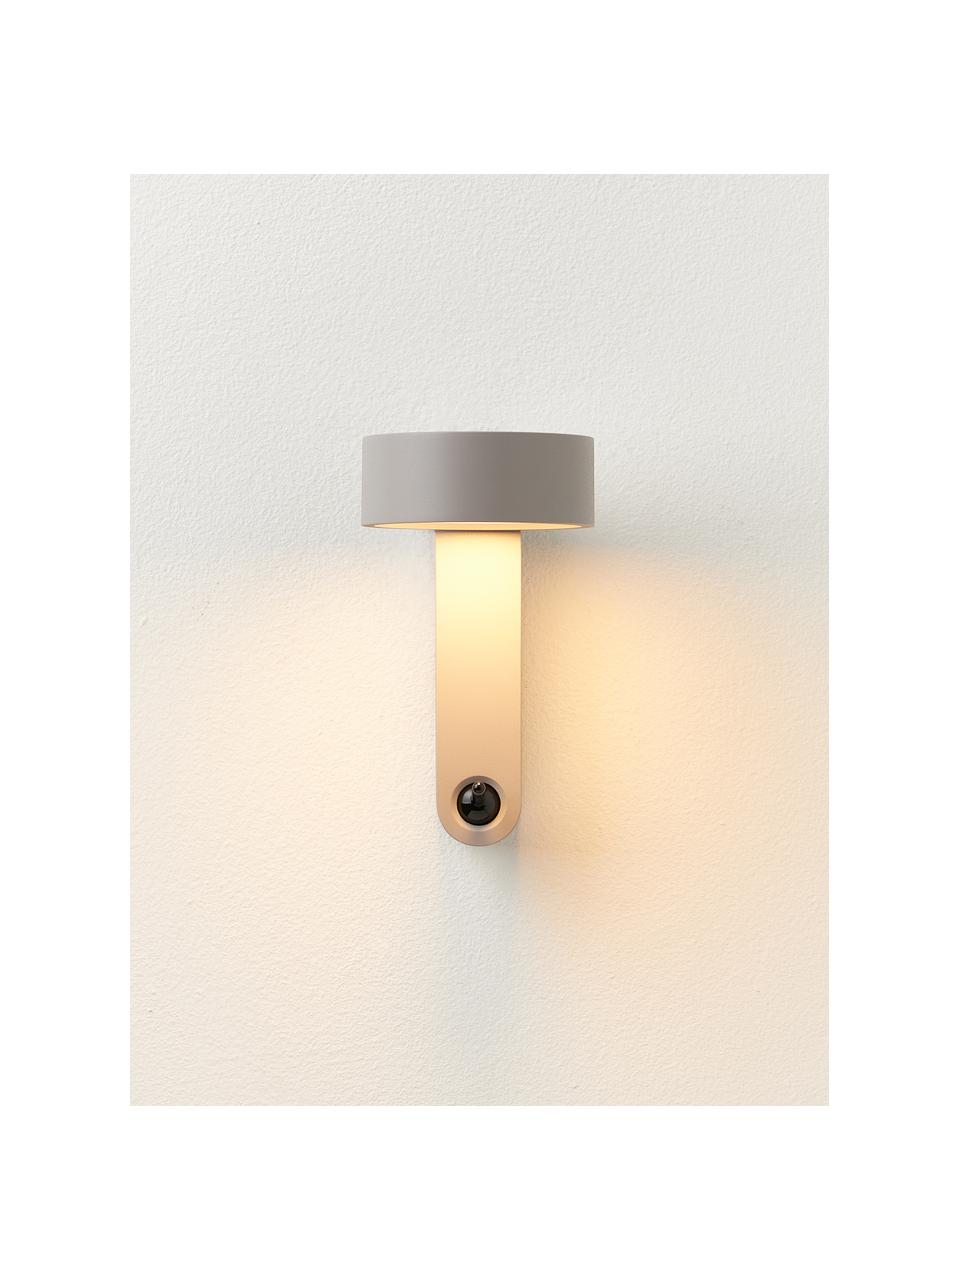 Kleine LED-Wandleuchte Toggle mit verstellbarem Lampenschirm, Aluminium, lackiert, Dunkelgrau, matt, B 10 x H 17 cm